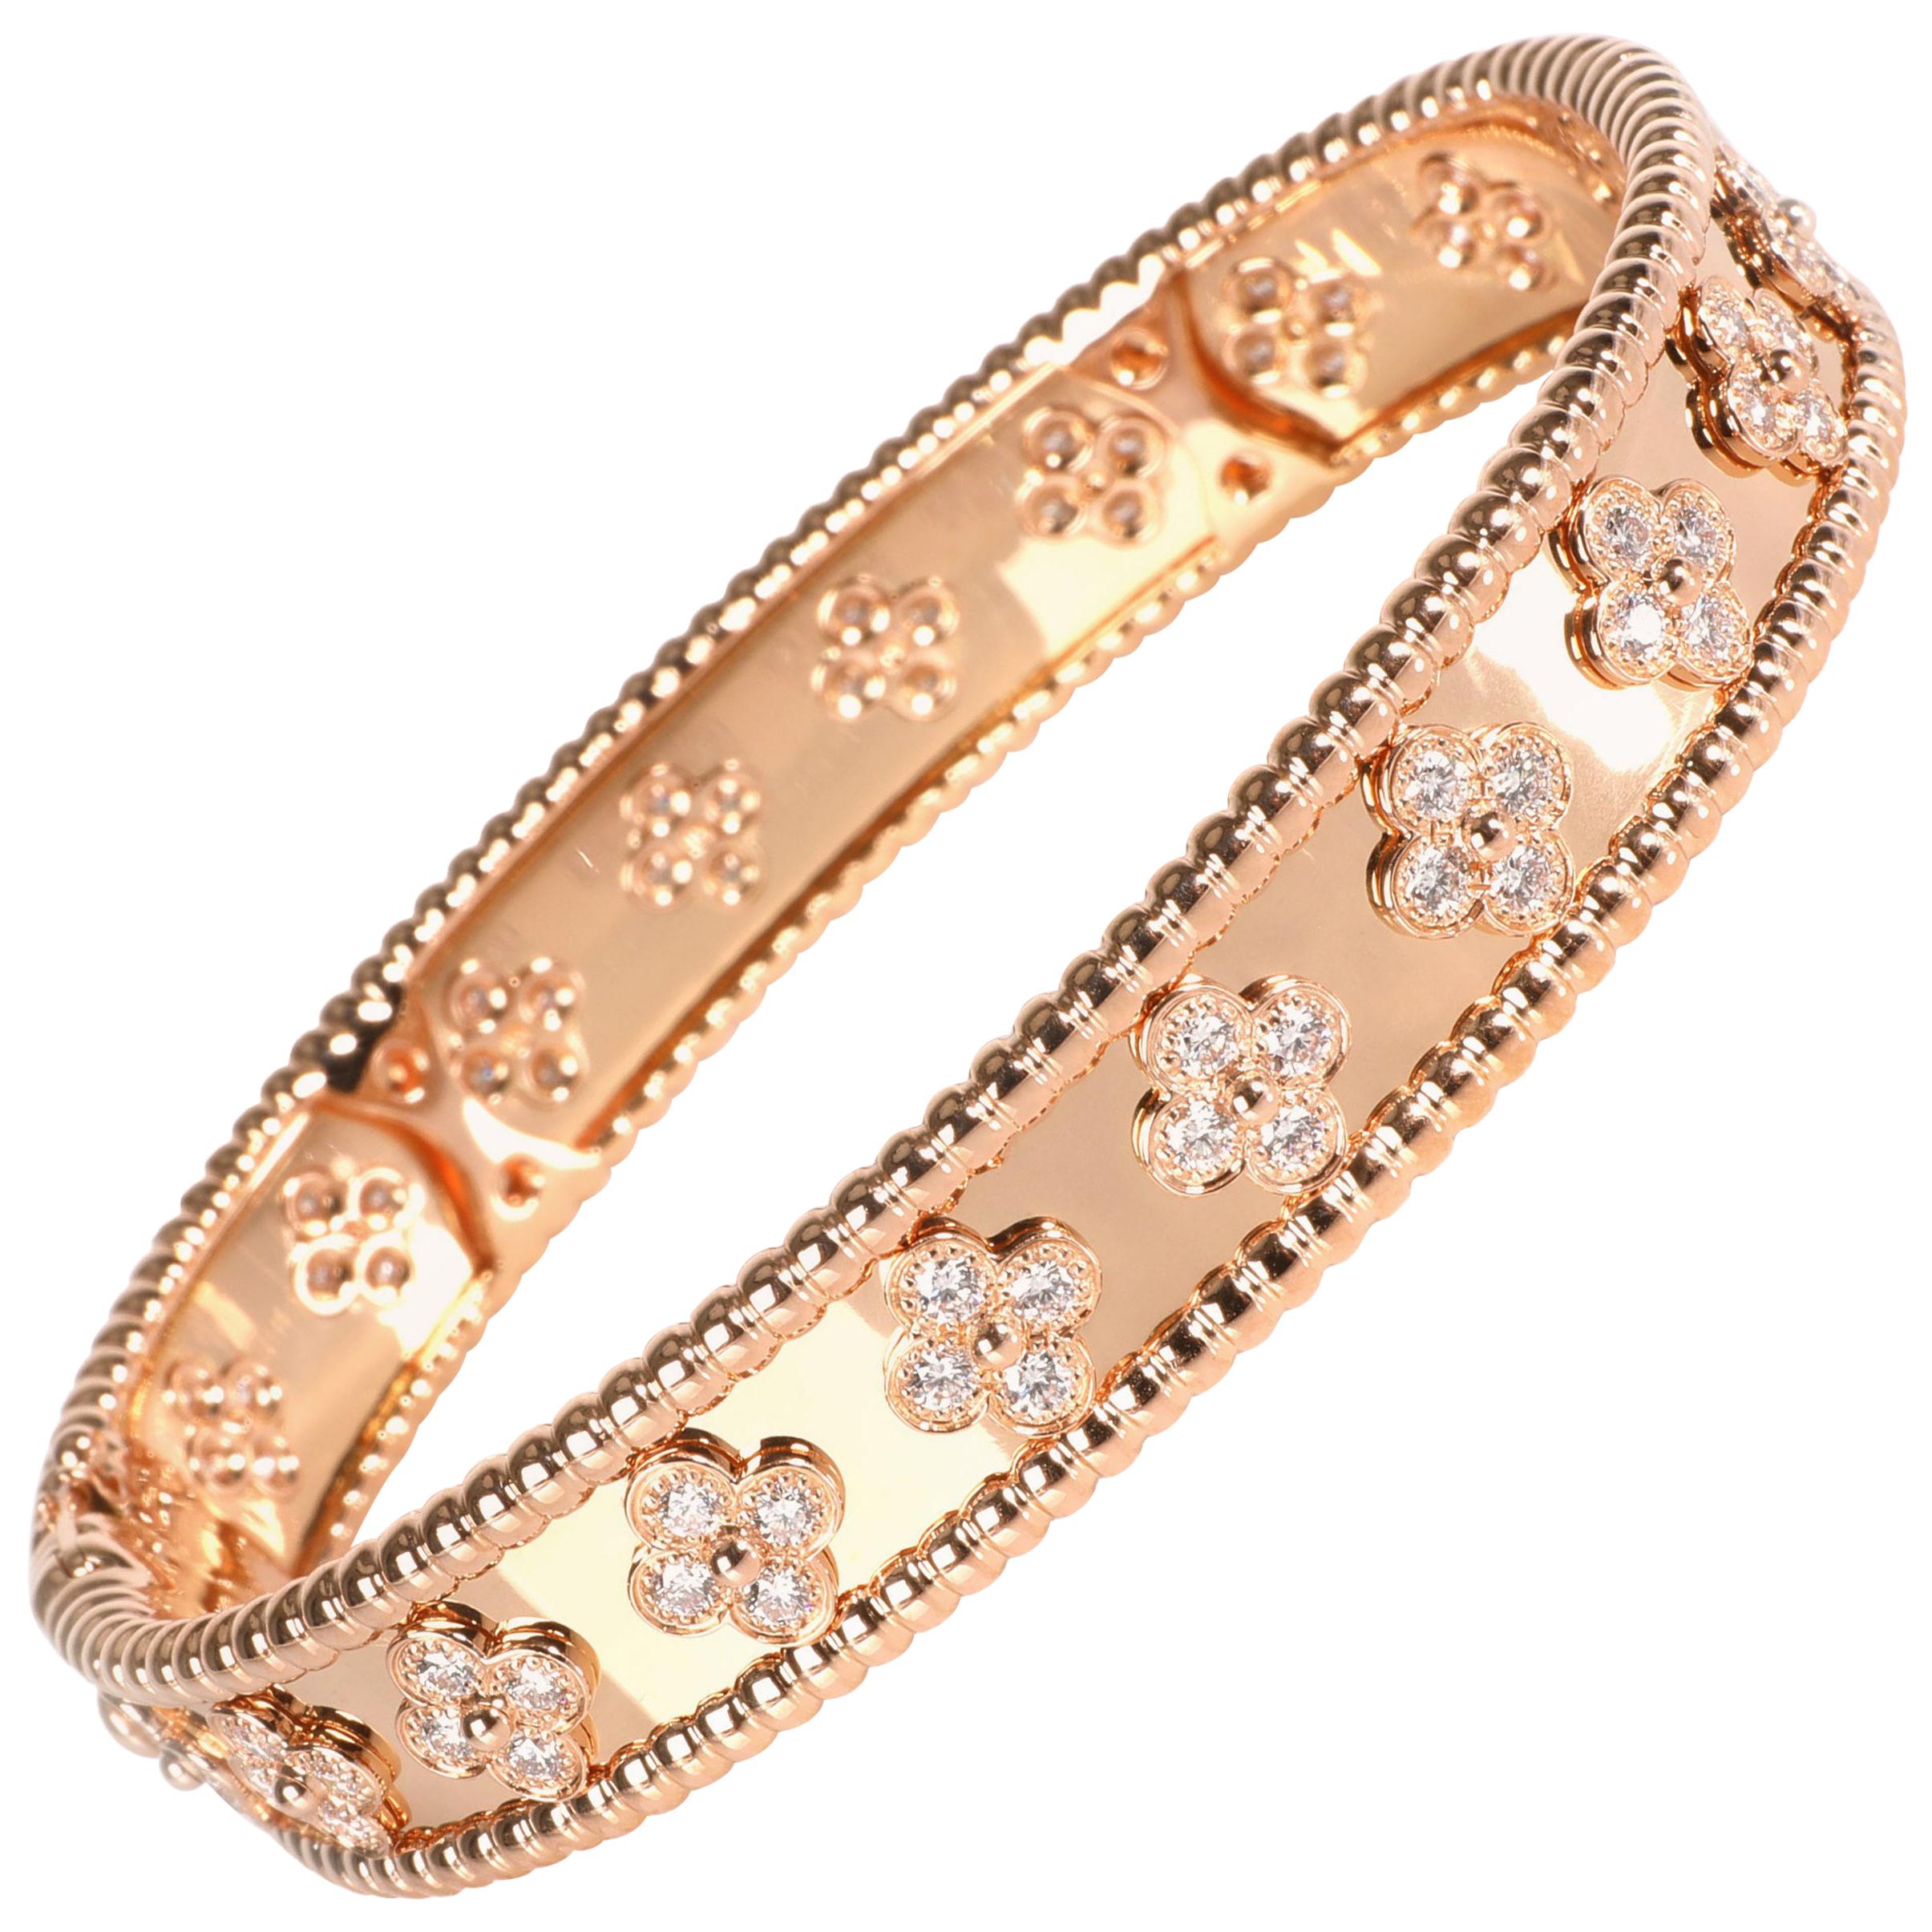 Van Cleef & Arpels Perlee Diamond Bracelet in 18 Karat Rose Gold 1.78 Carat